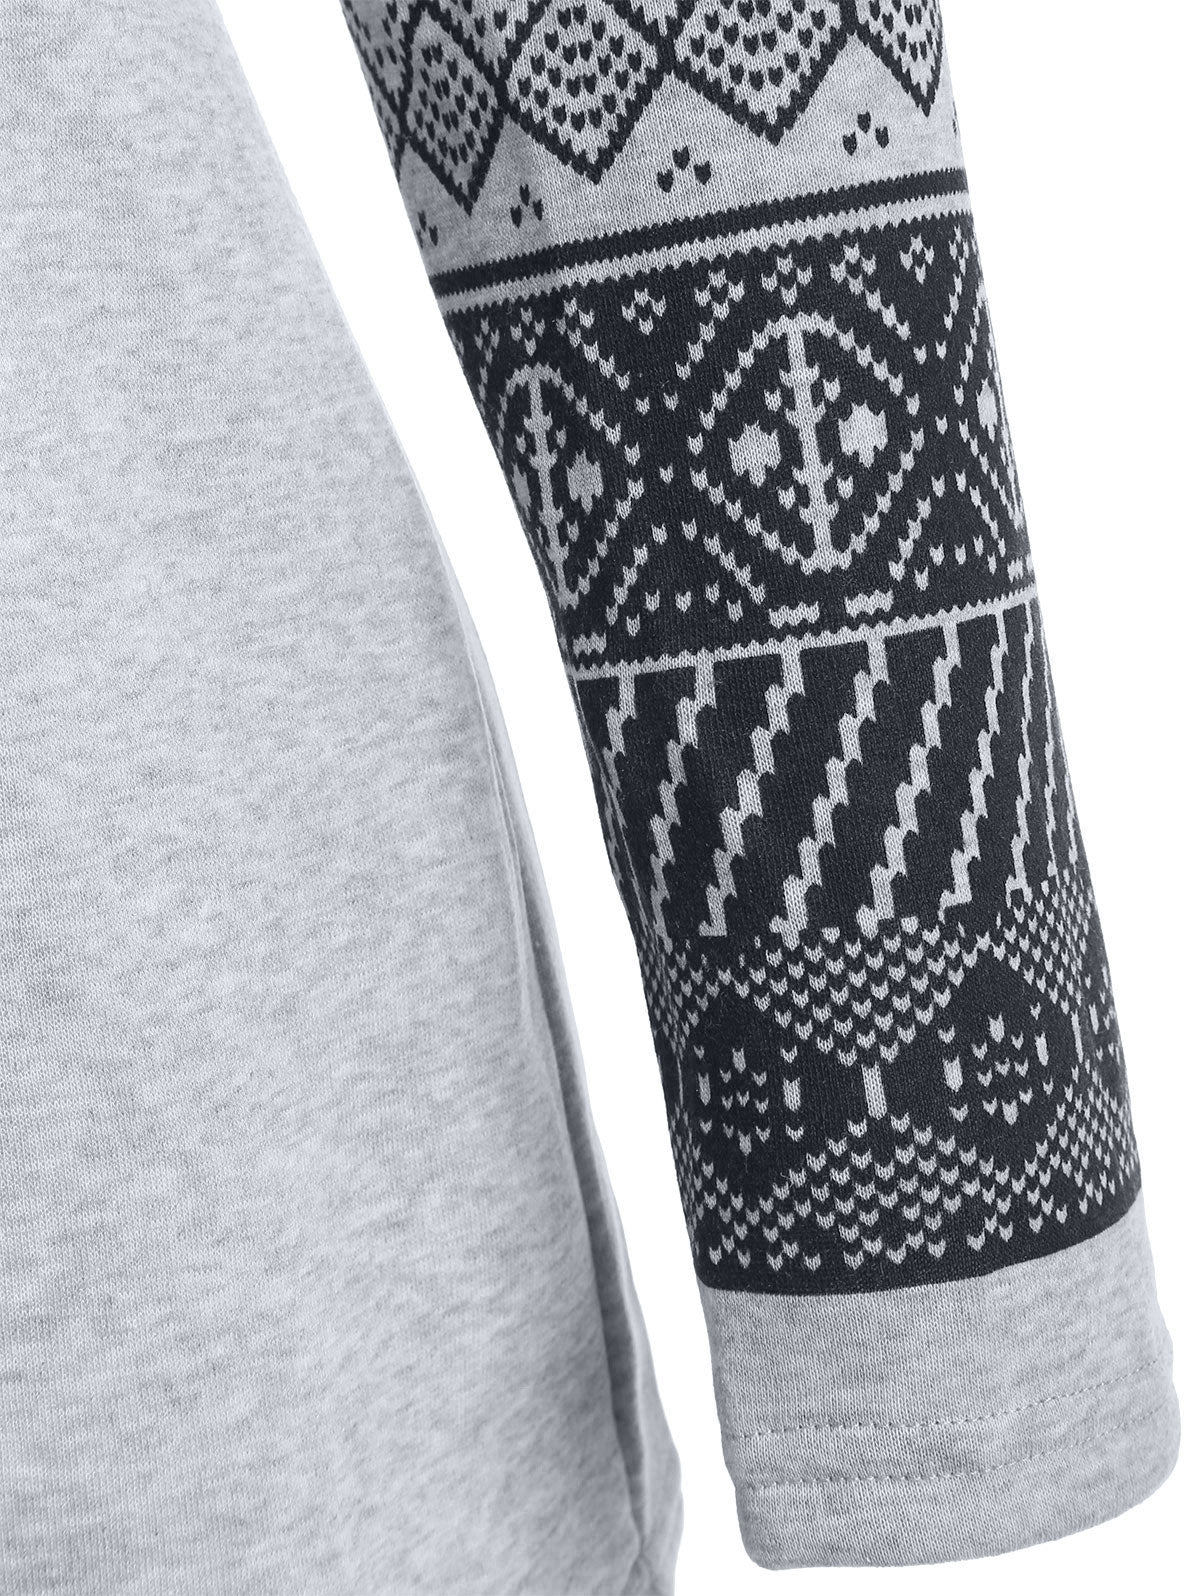 Casual Scoop Neck Geometric Print Spliced Thick Sweatshirt For Women